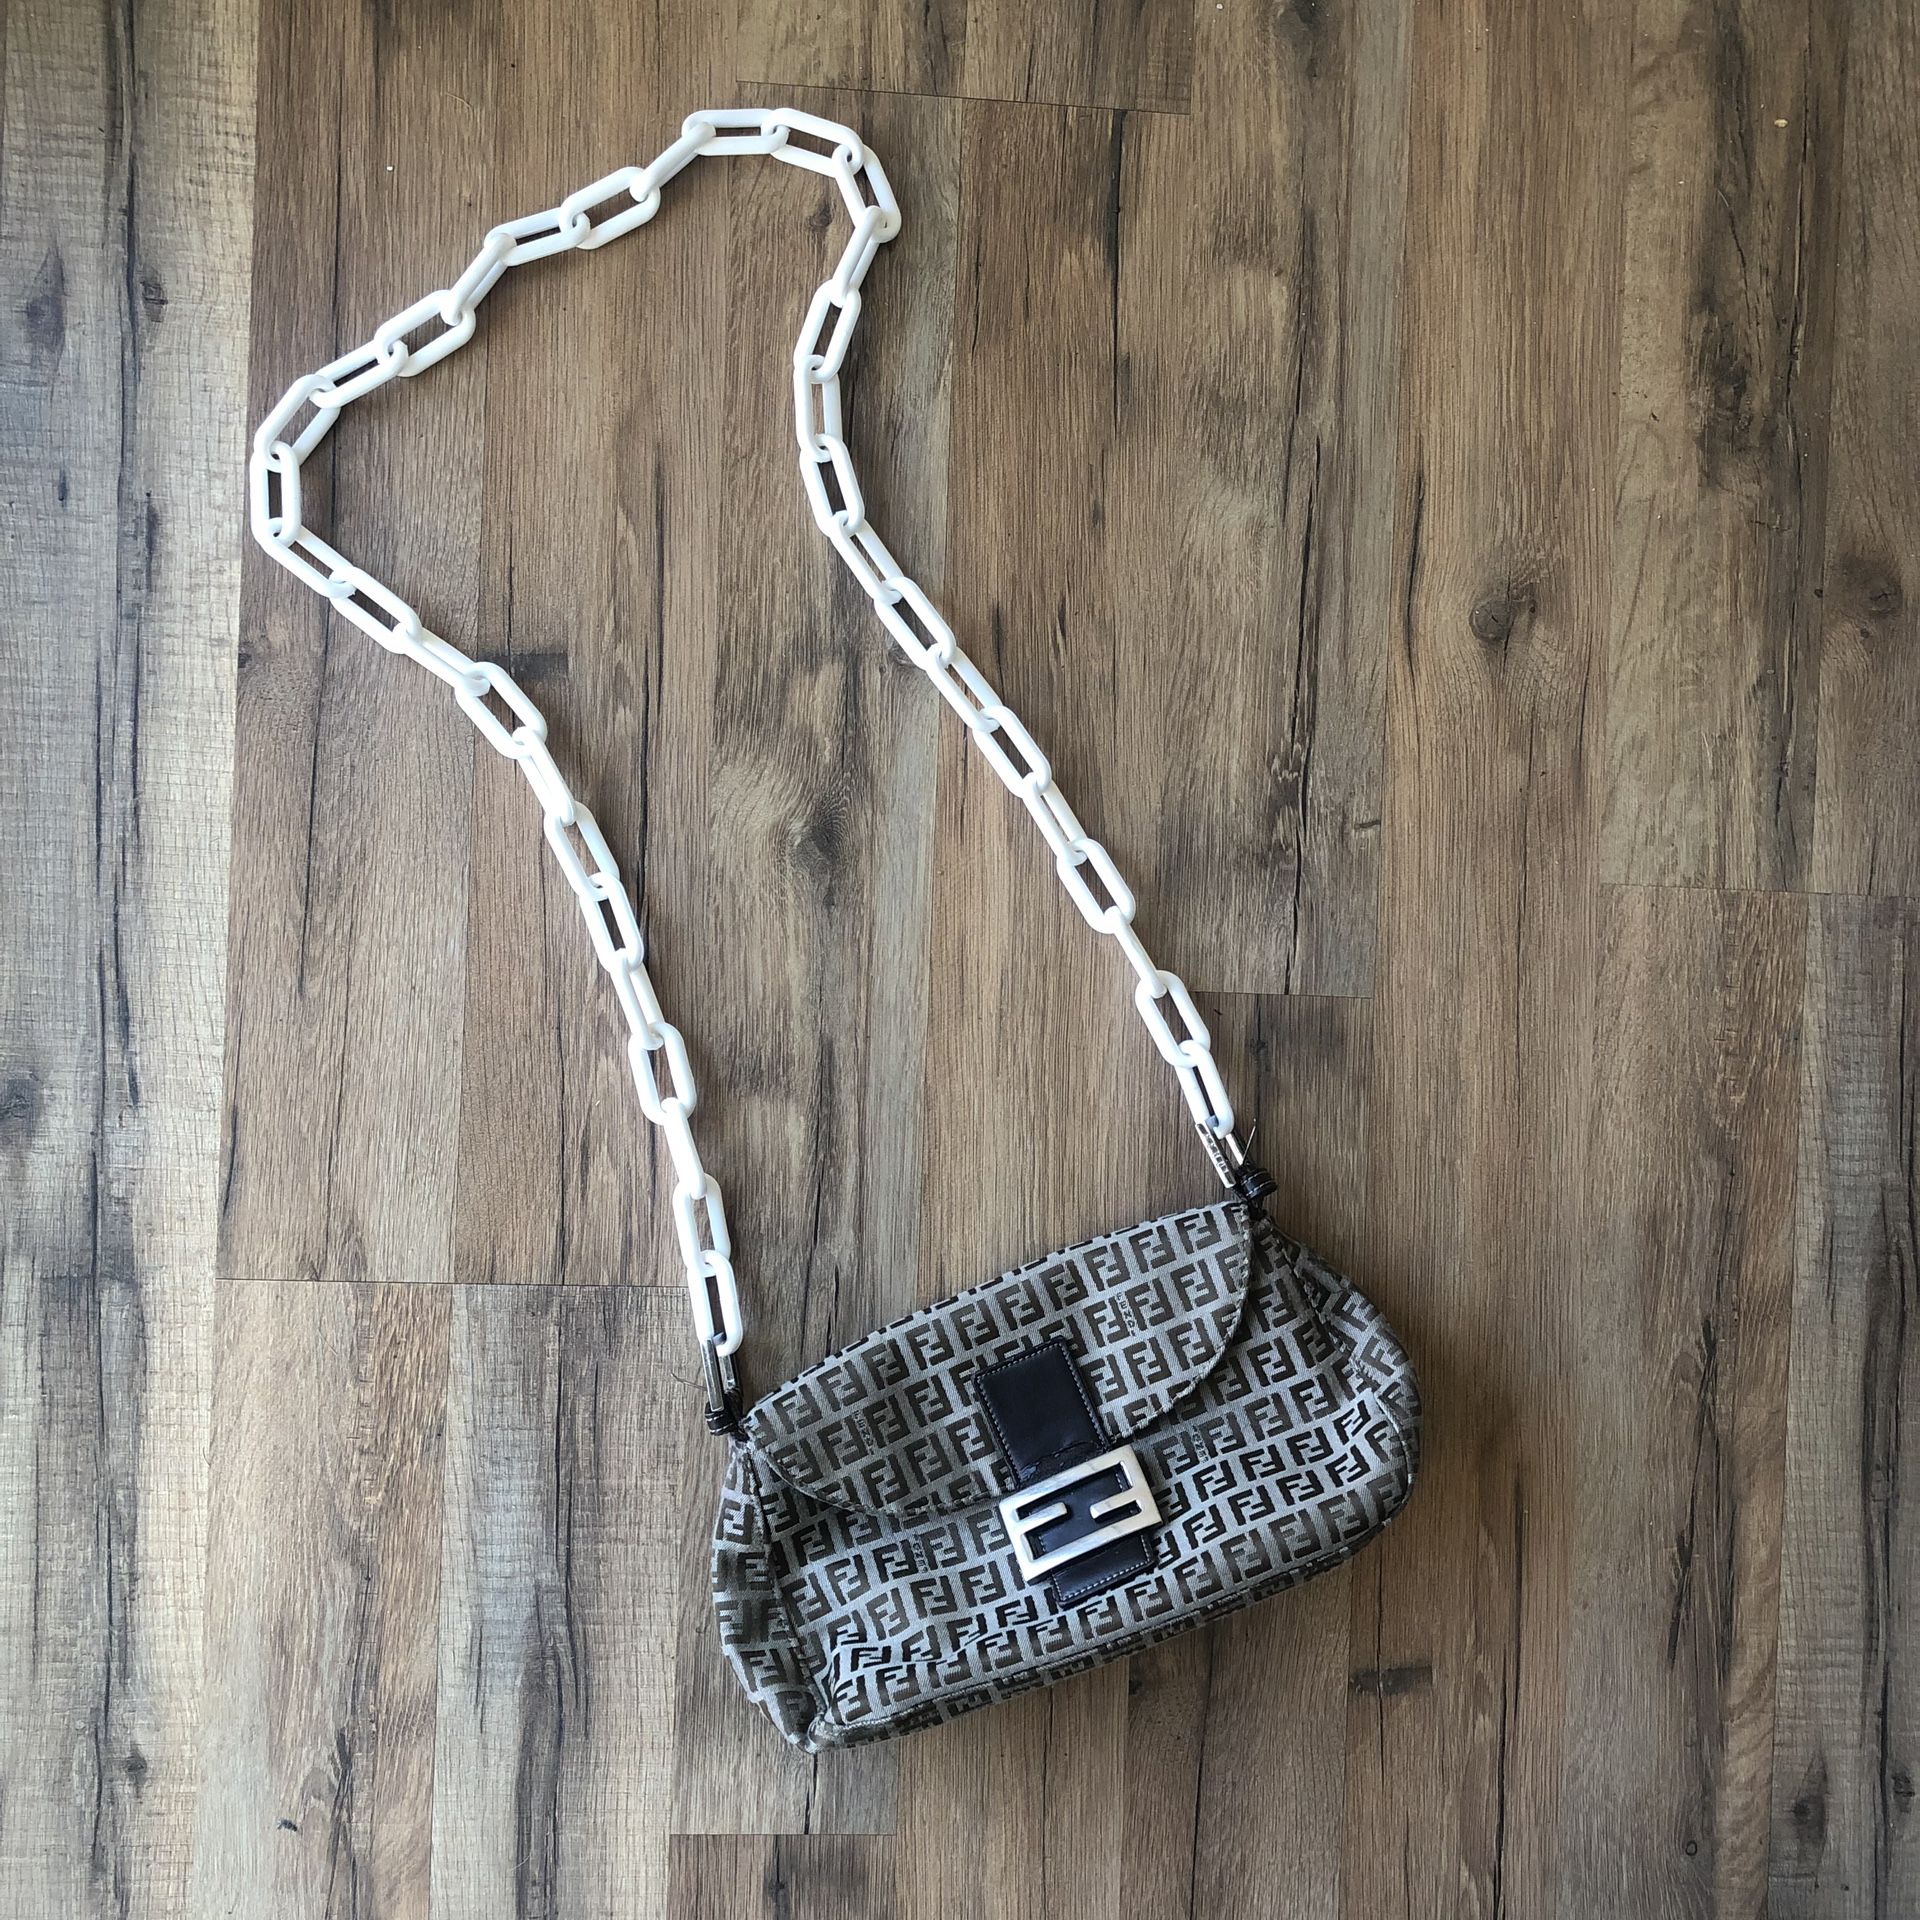 Fendi bag with chain strap